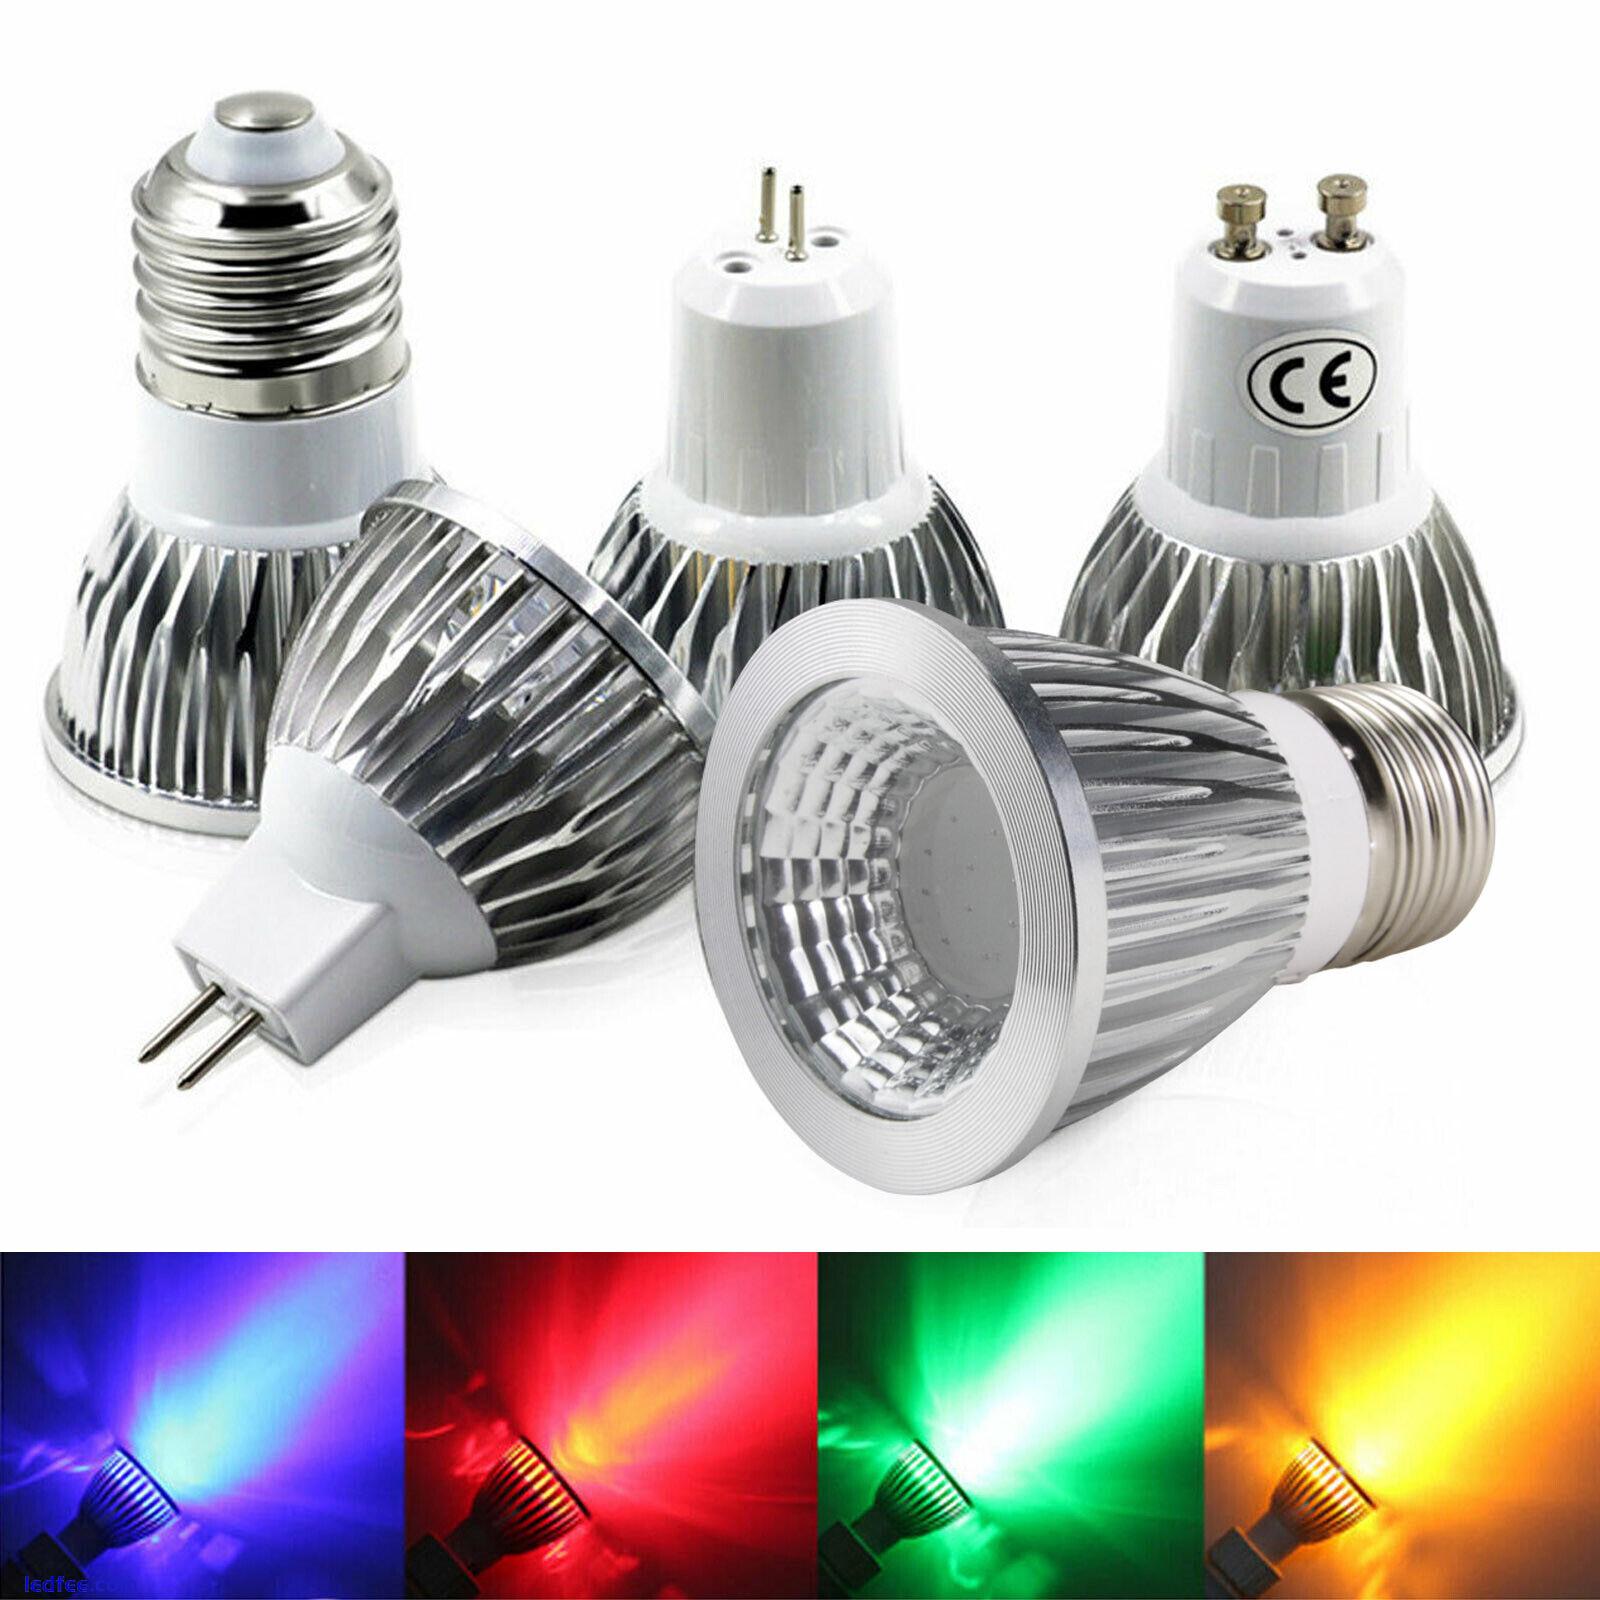 LED COB Spotlight Bulbs Dimmable B22 E14 E27 GU10 GU5.3 6W 9W 12W Light Lamp 0 